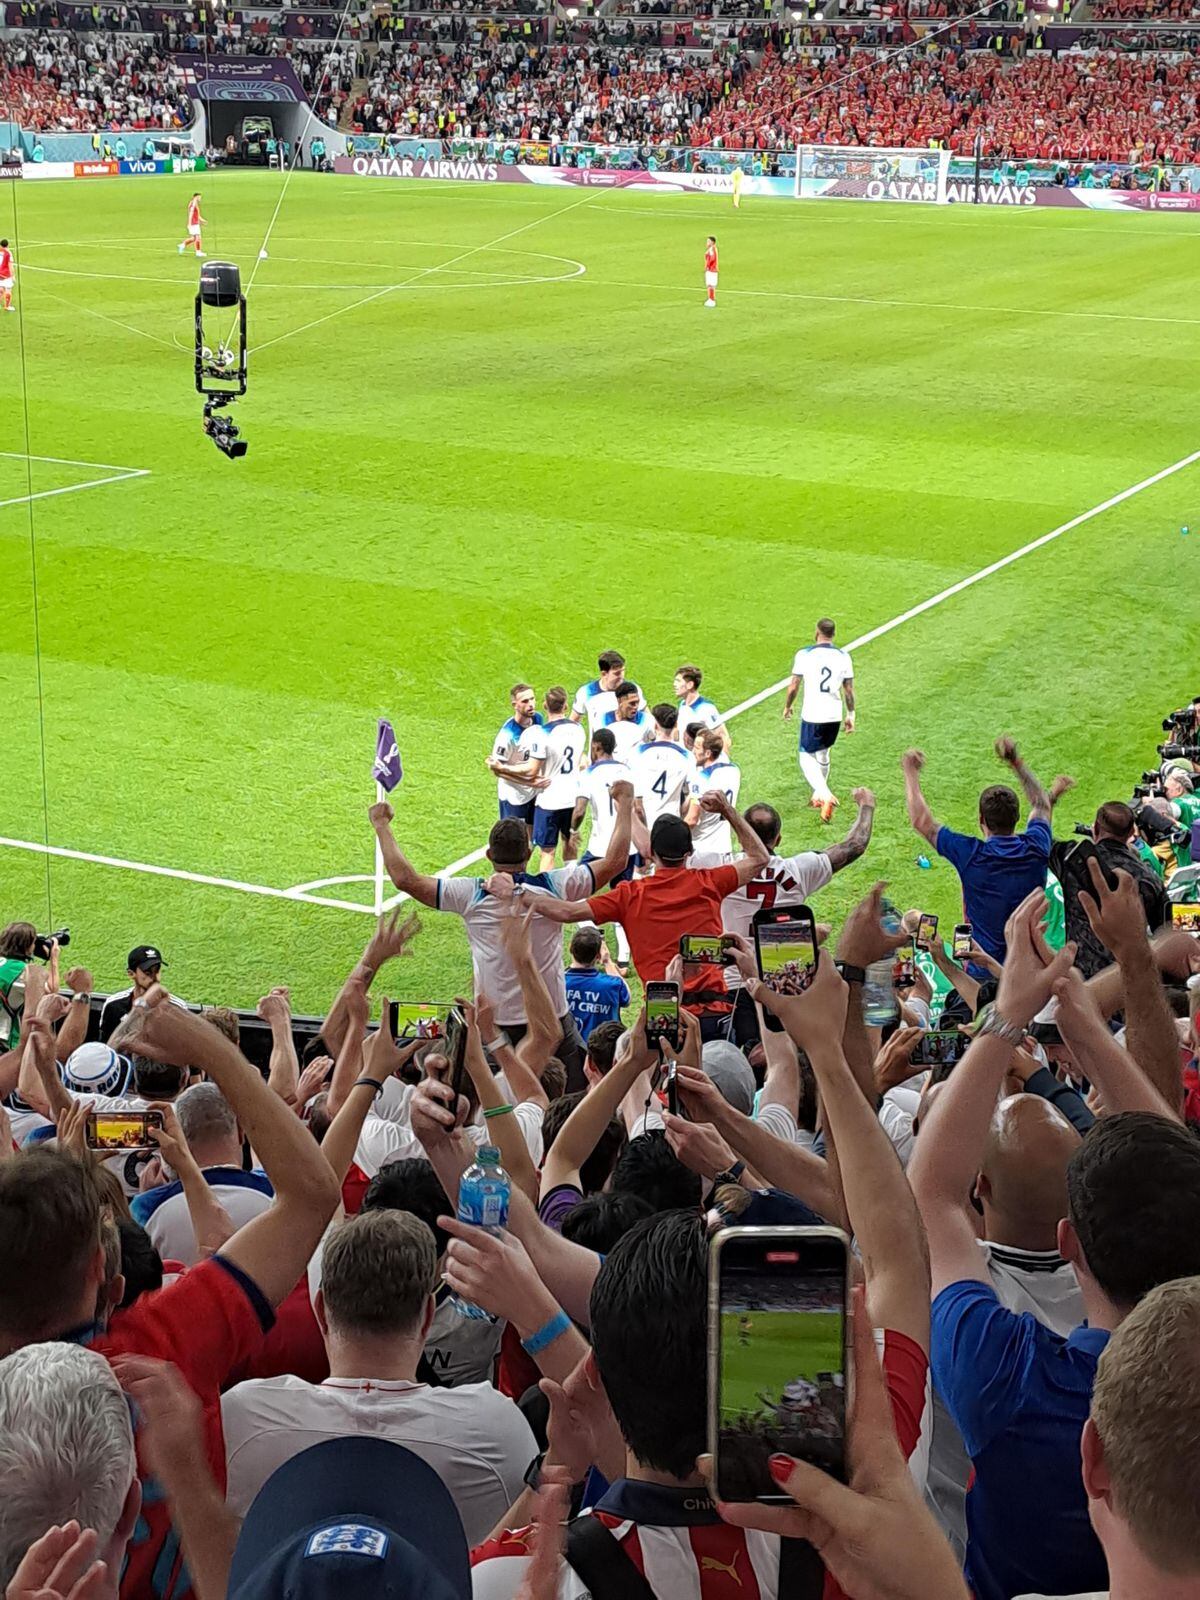 England's players celebrate a goal